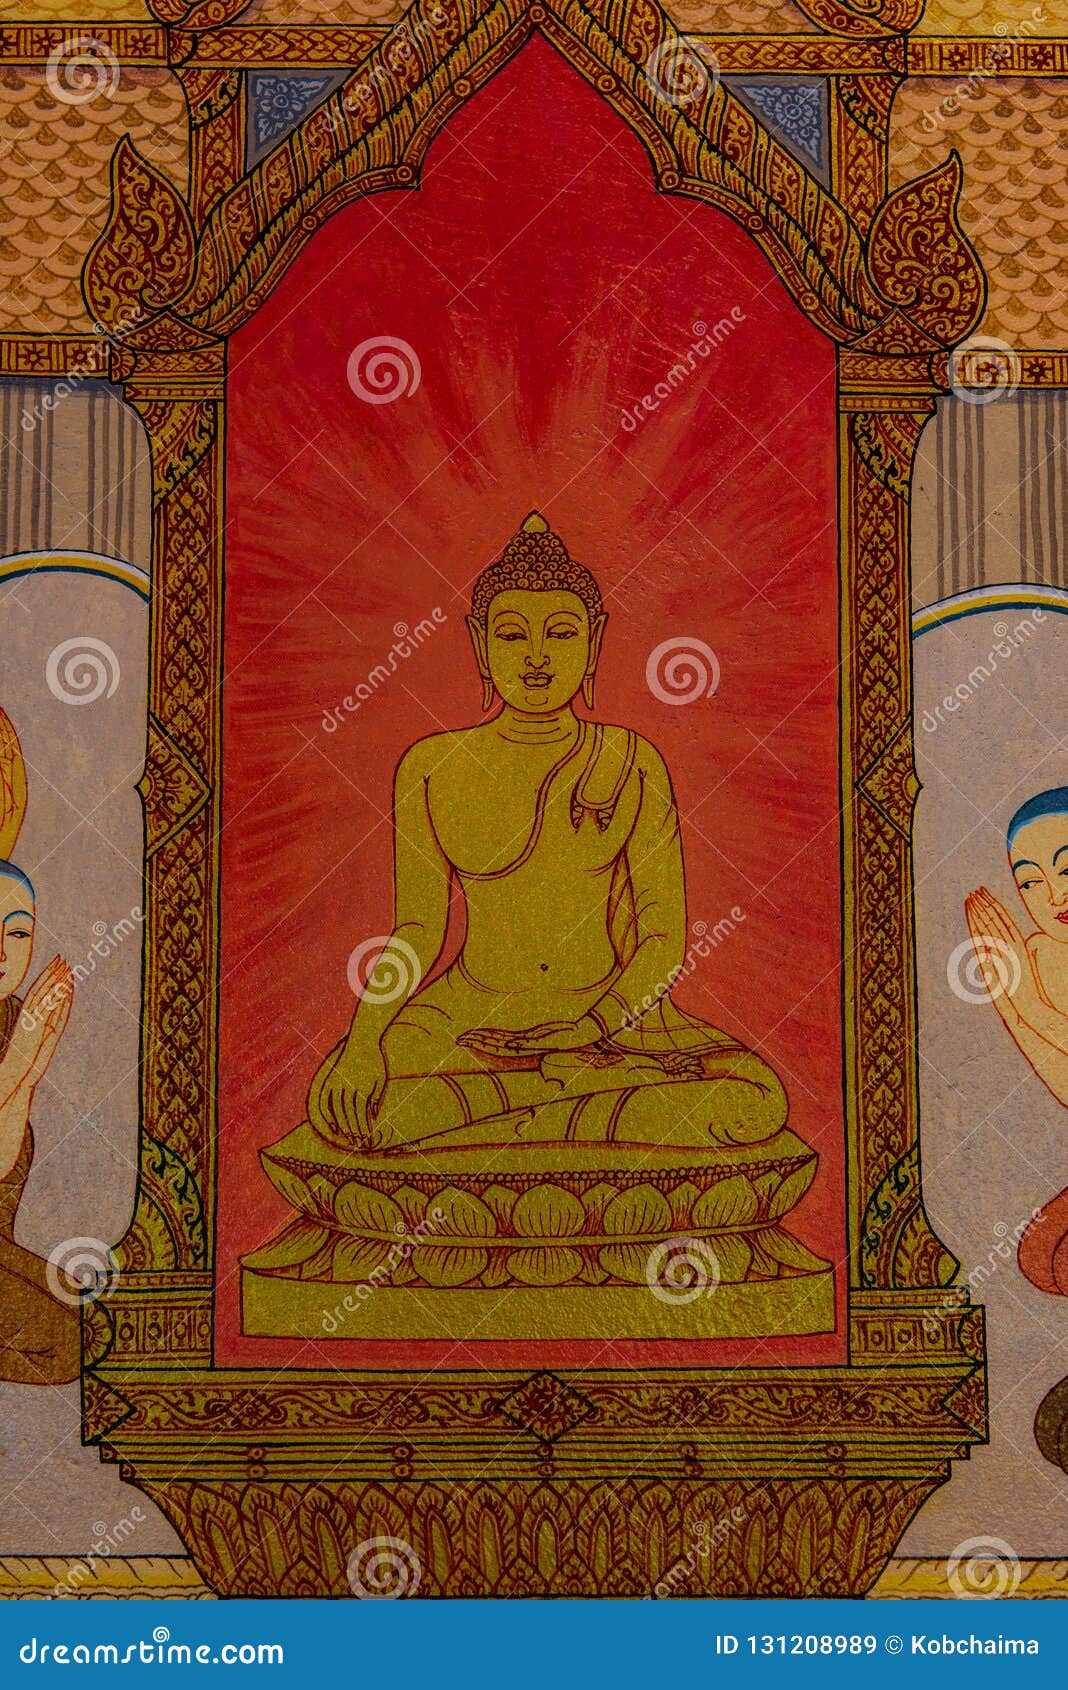 trendyWallpaintings Lord Buddha wall paintings - YouTube